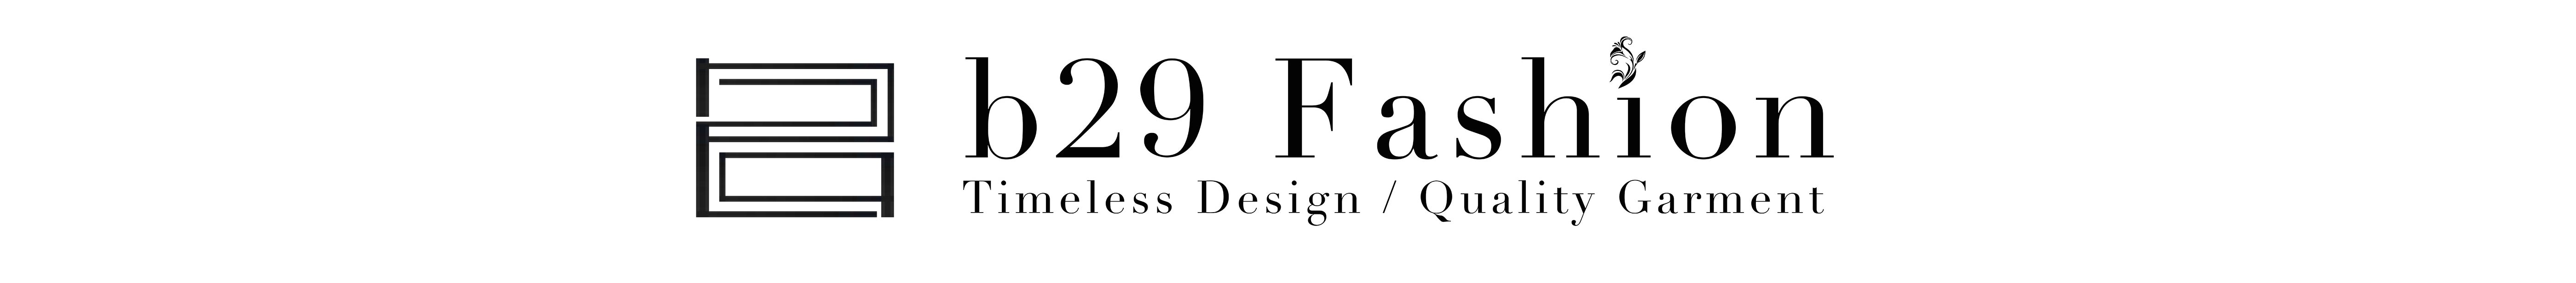 B29 Fashion - Online Retailer for Luxury Brands like Hugo Boss, Diesel, Lanvin, Dolce & Gabbana, Balmain, Maison Margiela, Armani, Versace and more.